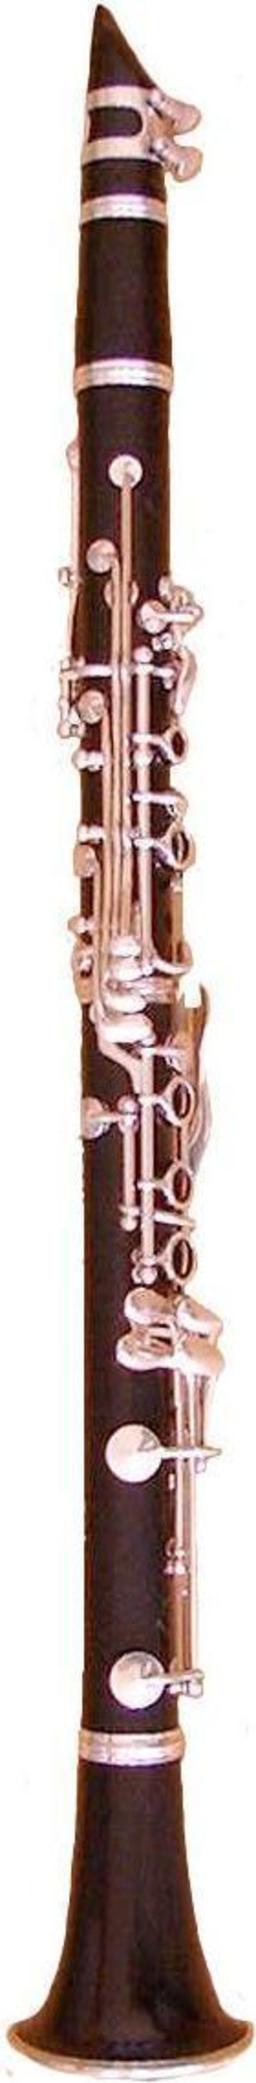 Clarinette. Source : http://data.abuledu.org/URI/50ed9340-clarinette